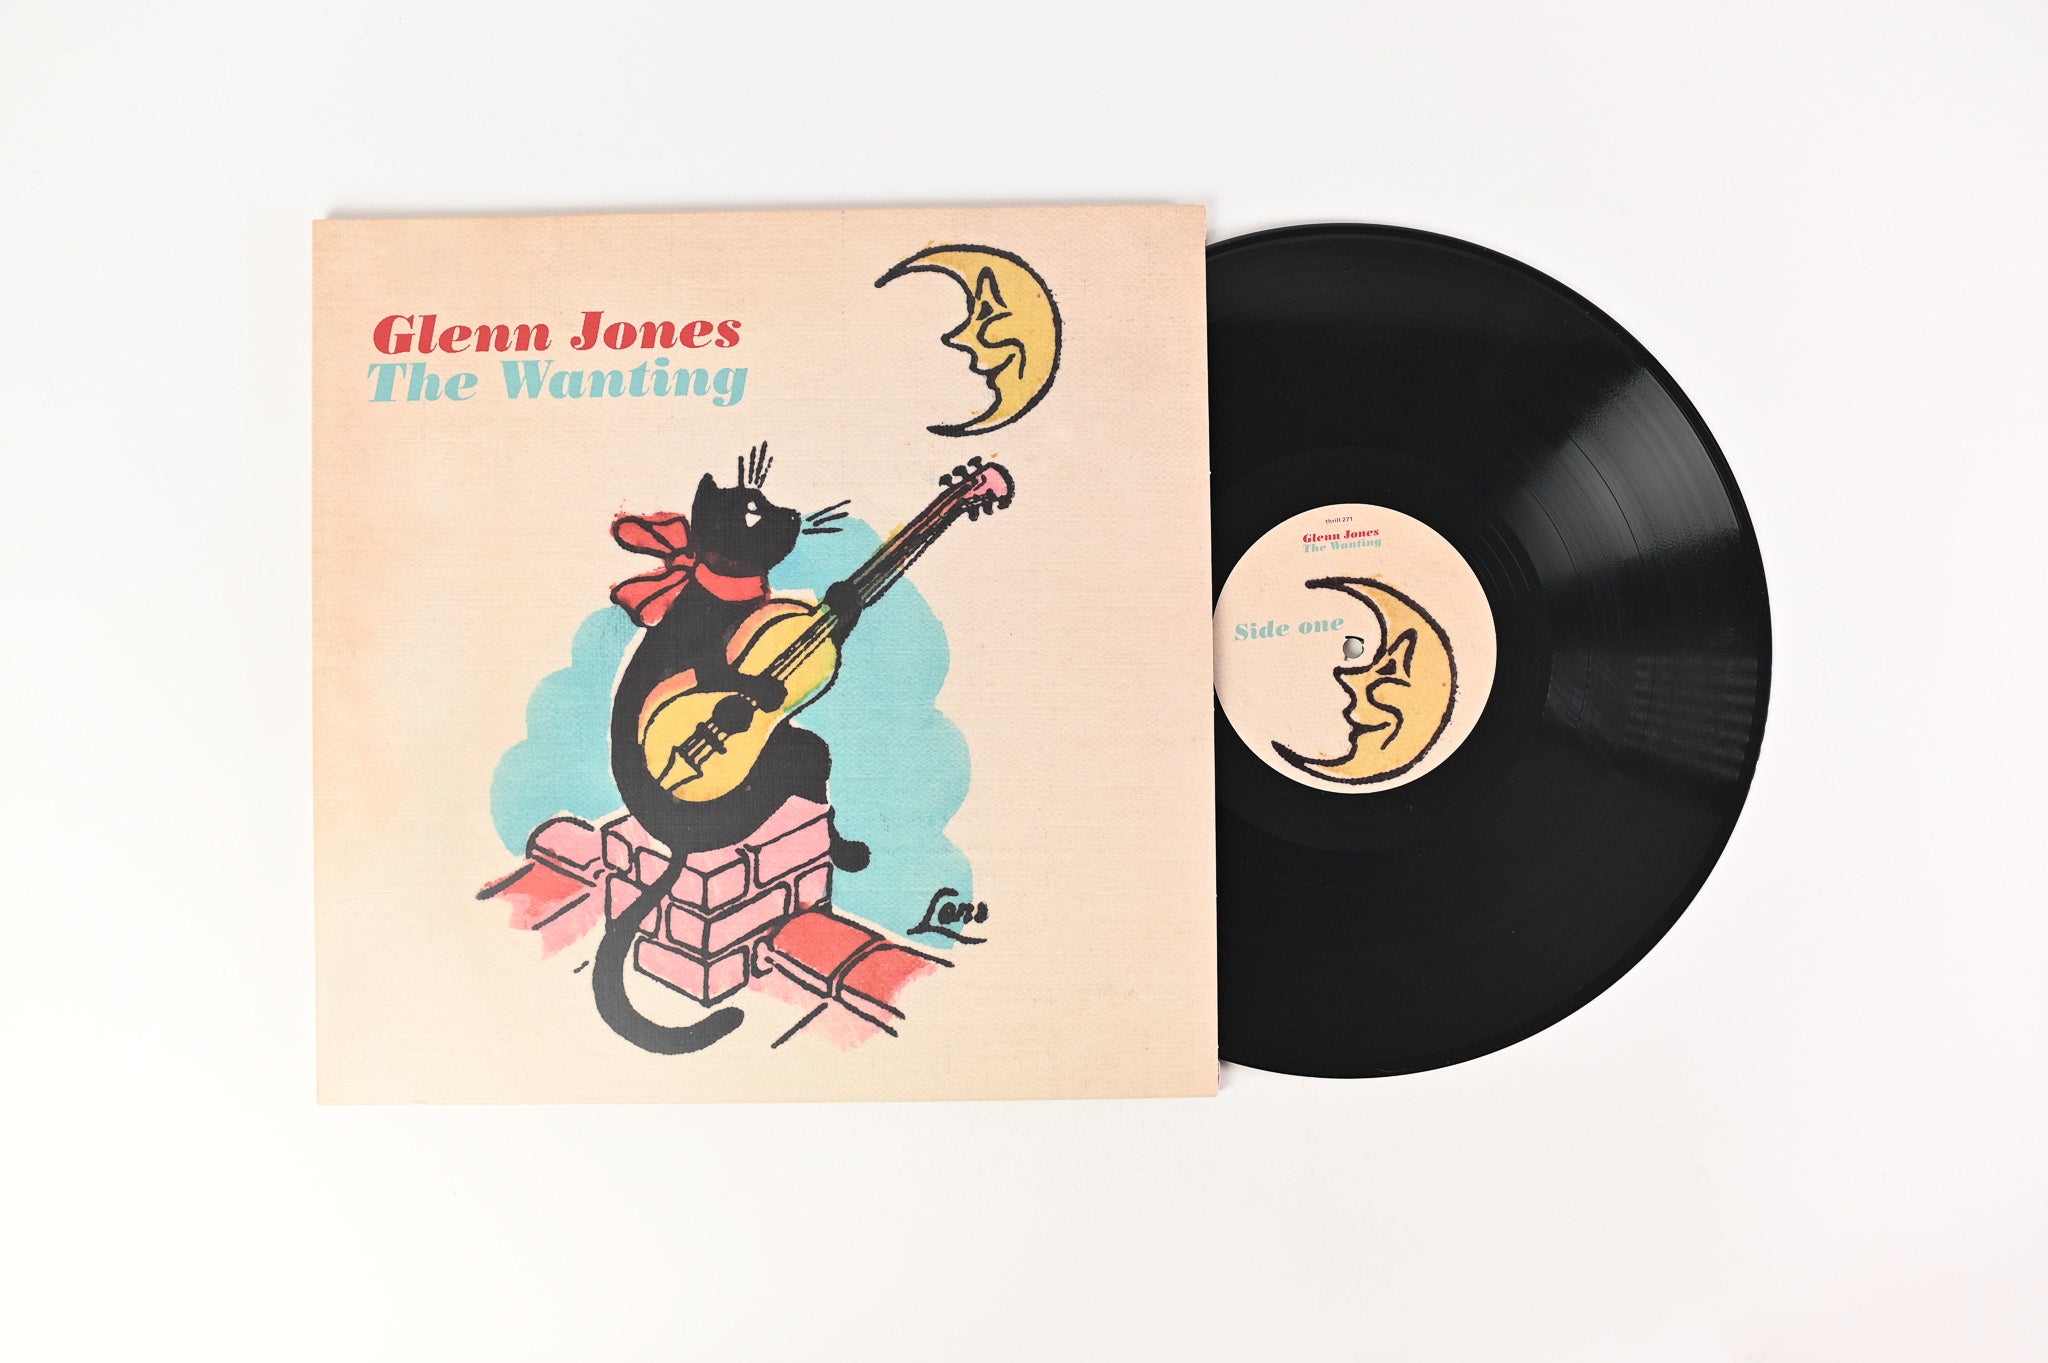 Glenn Jones - The Wanting on Thrill Jockey